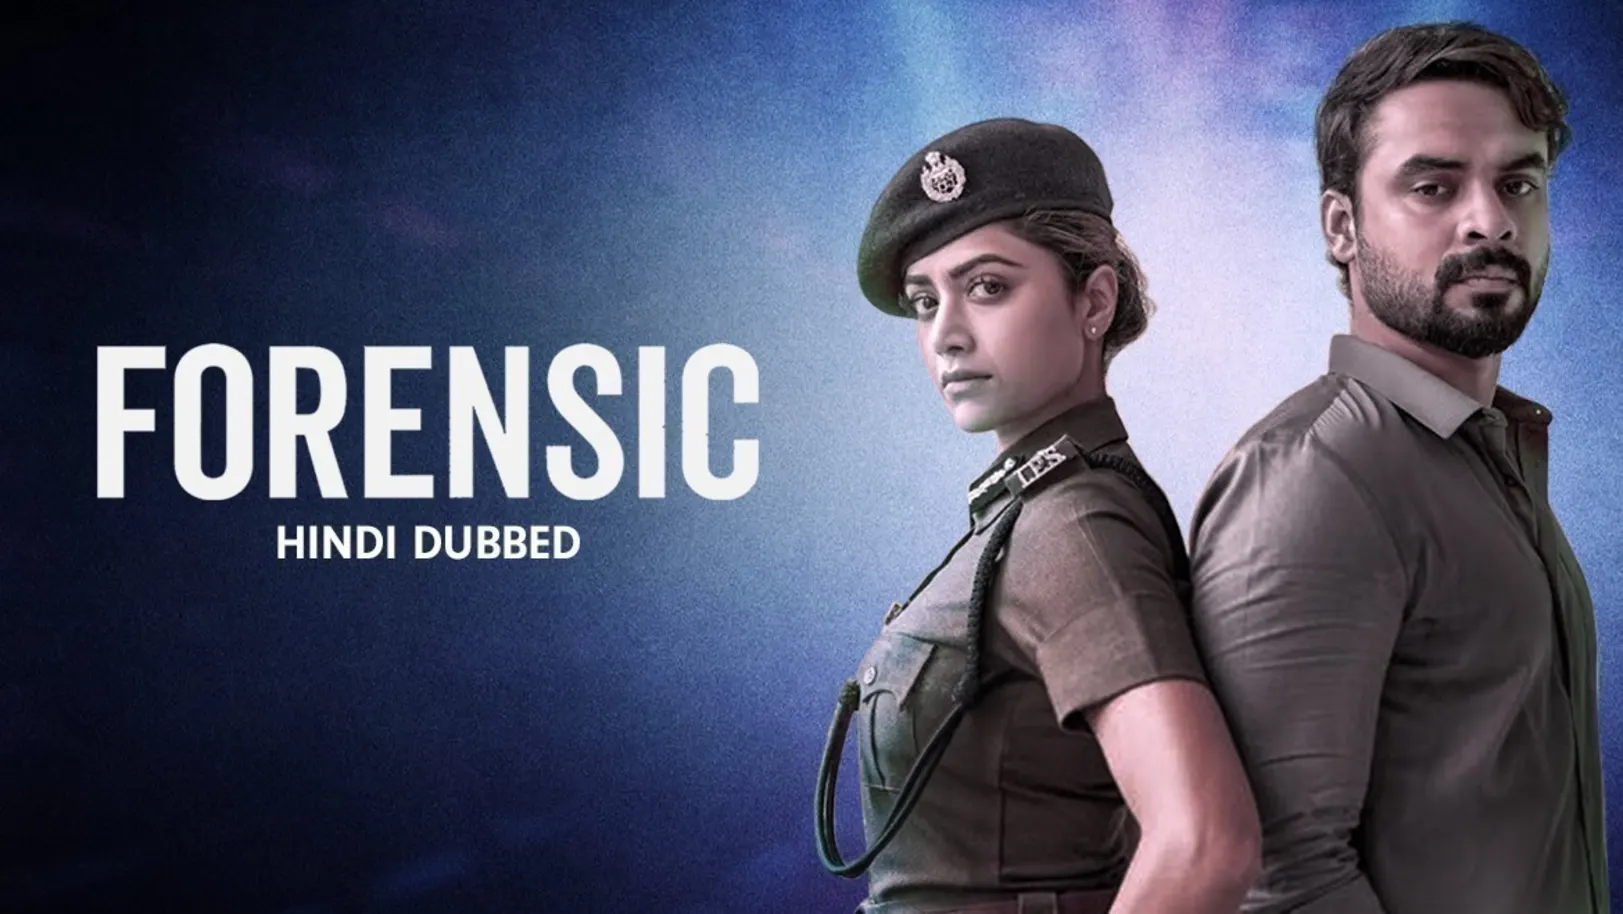 Forensic (Hindi Dubbed) Movie